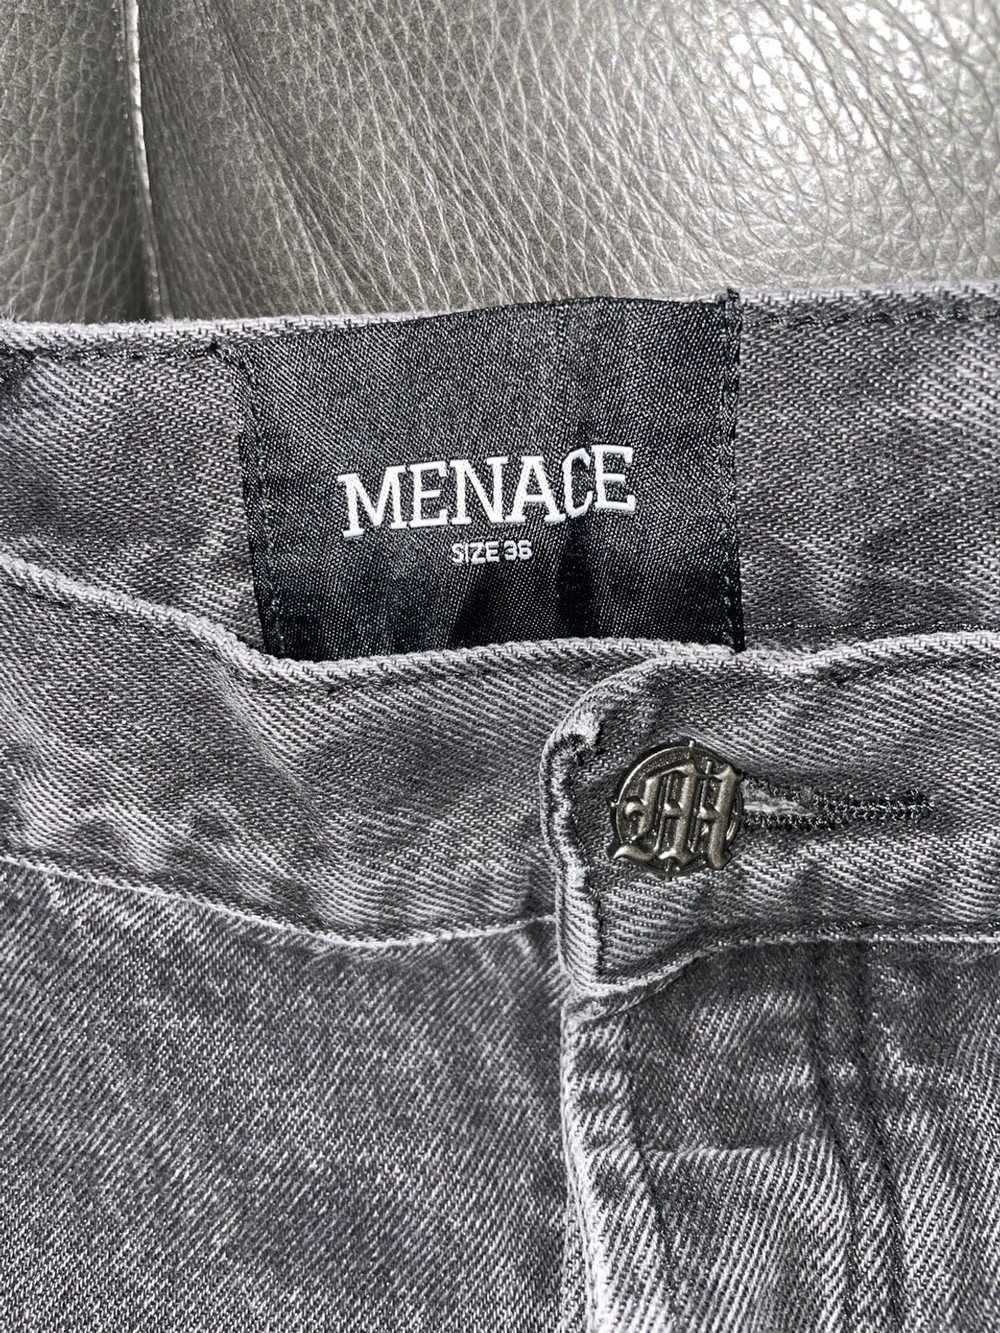 Menace Distressed Stencil Denim Pants Menace LA - image 3